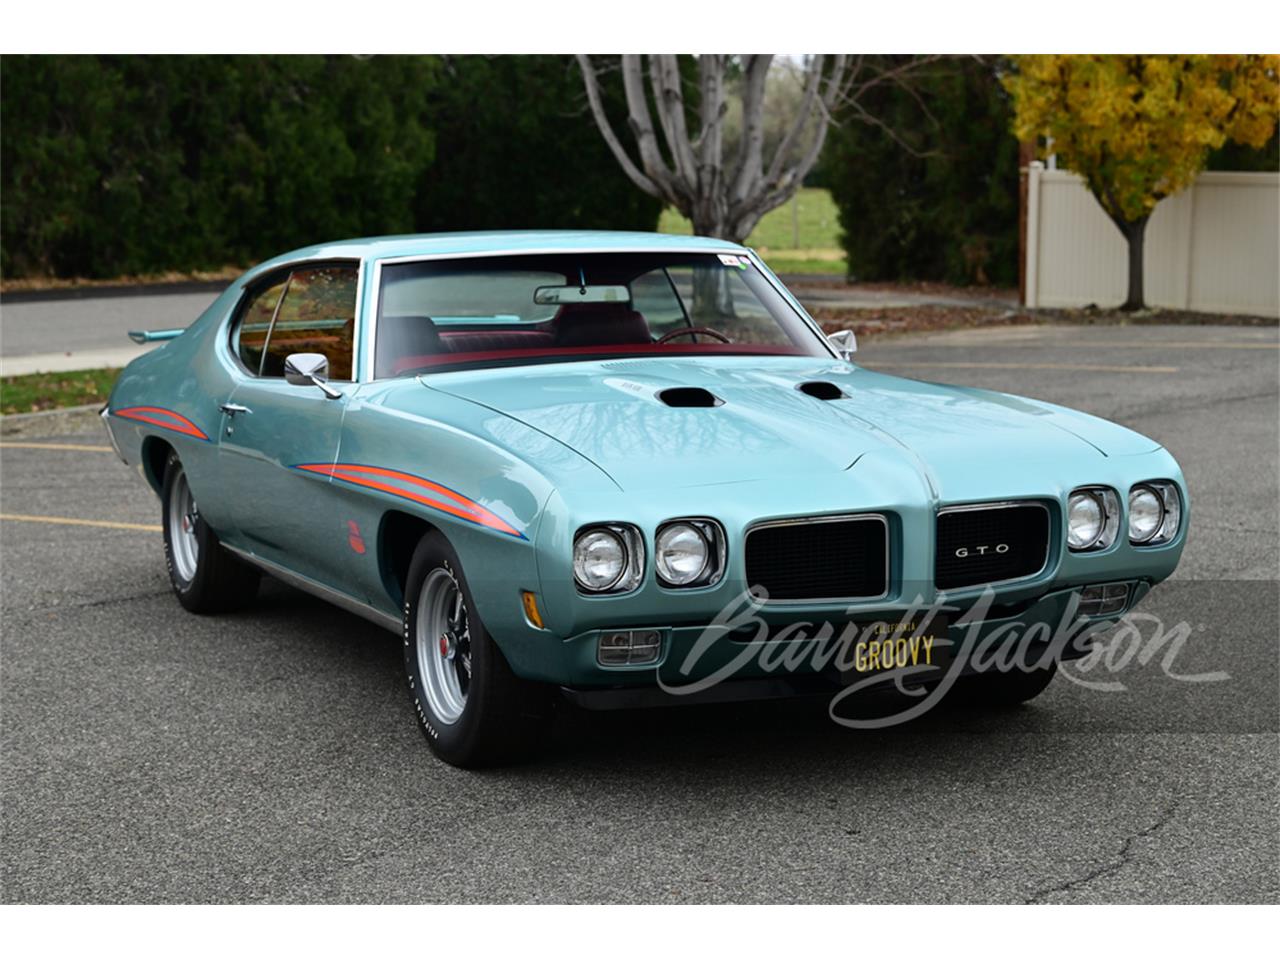 1970 Pontiac GTO (The Judge) in Scottsdale, Arizona for sale in Scottsdale, AZ